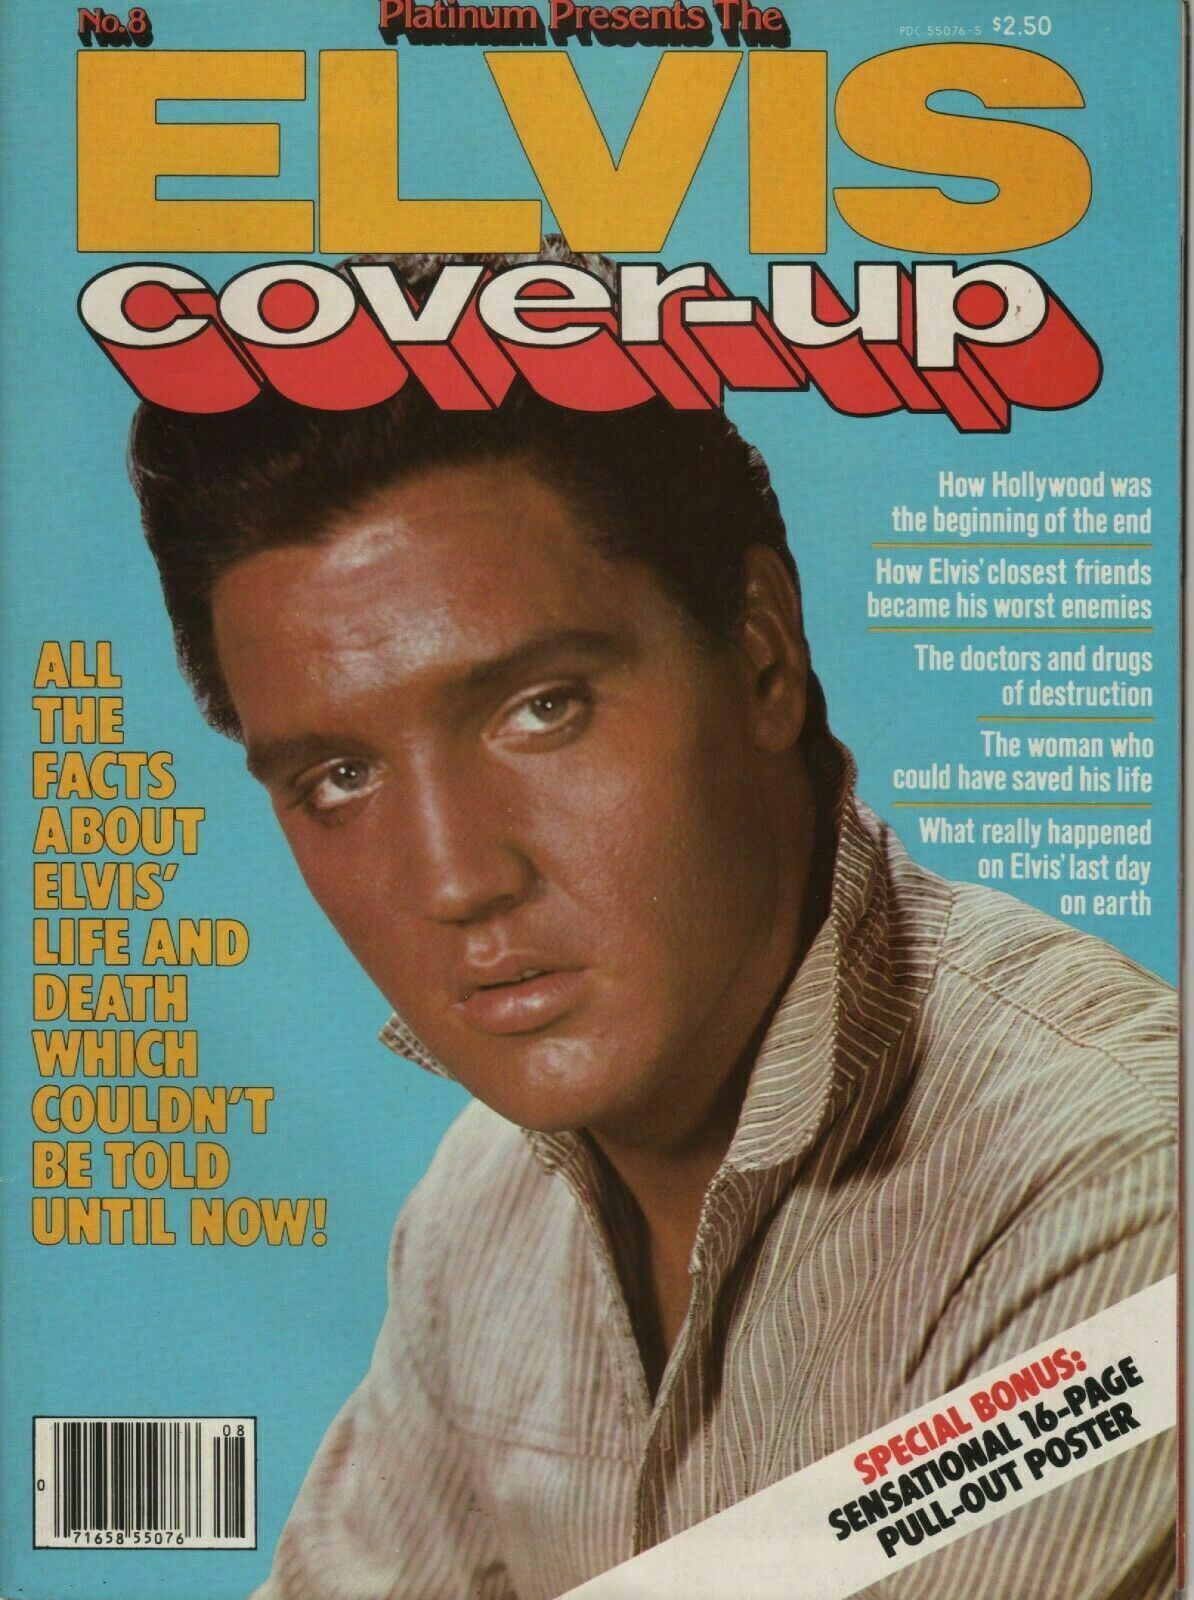 Platinum Present Elvis Presley Cover-up Magazine 1980 His Women Death Friends